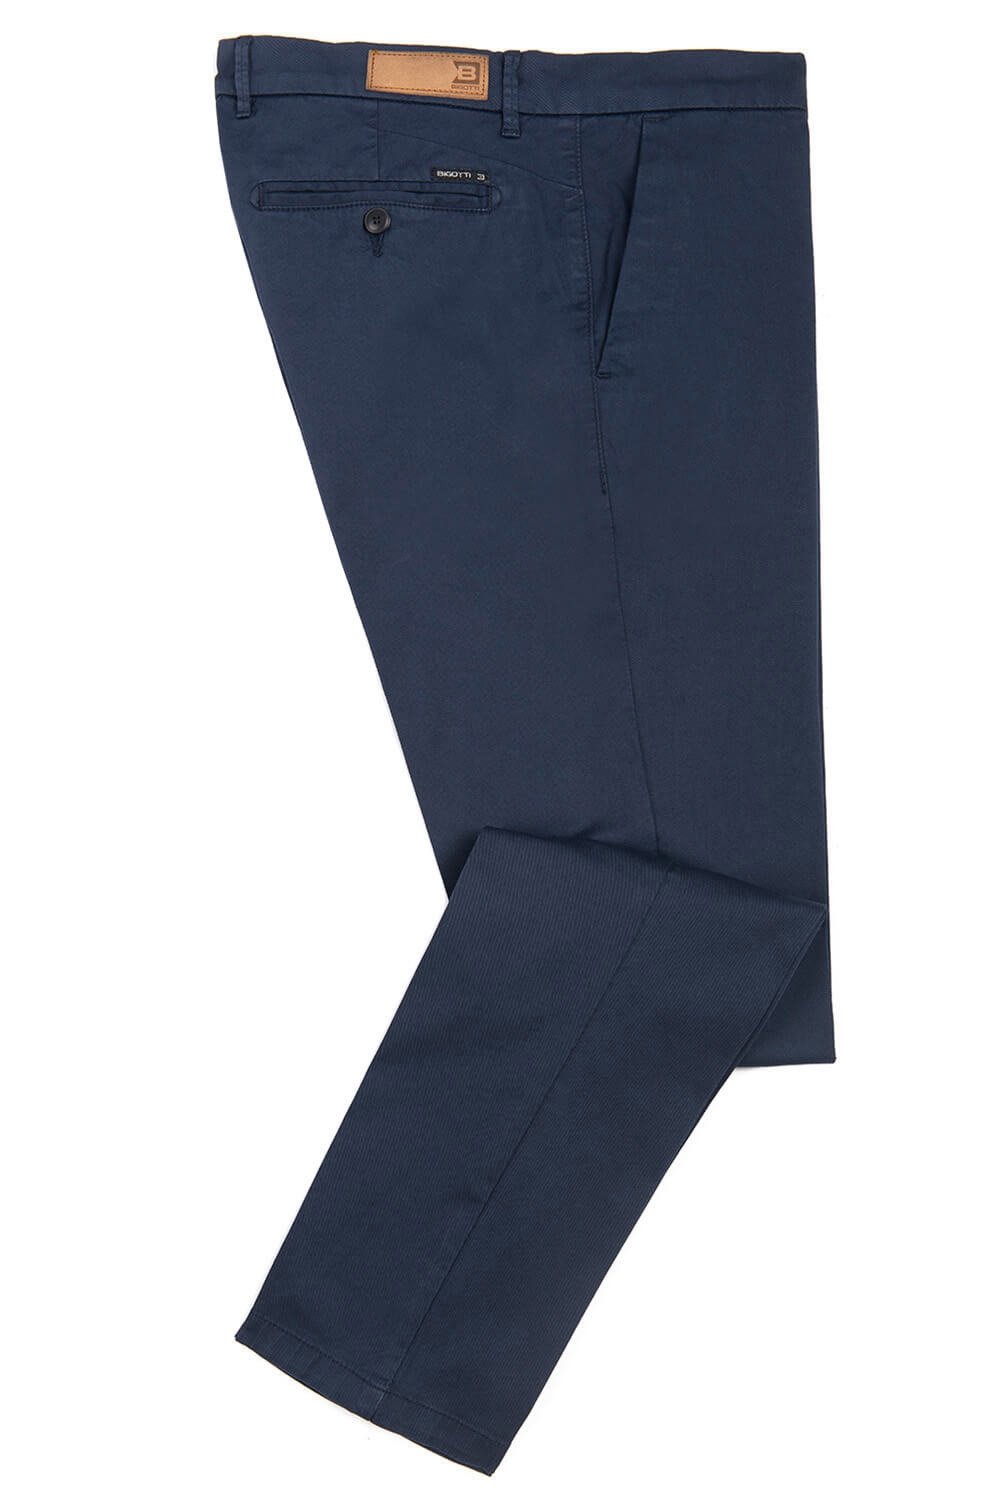 Pantaloni superslim marco bleumarin uni 1